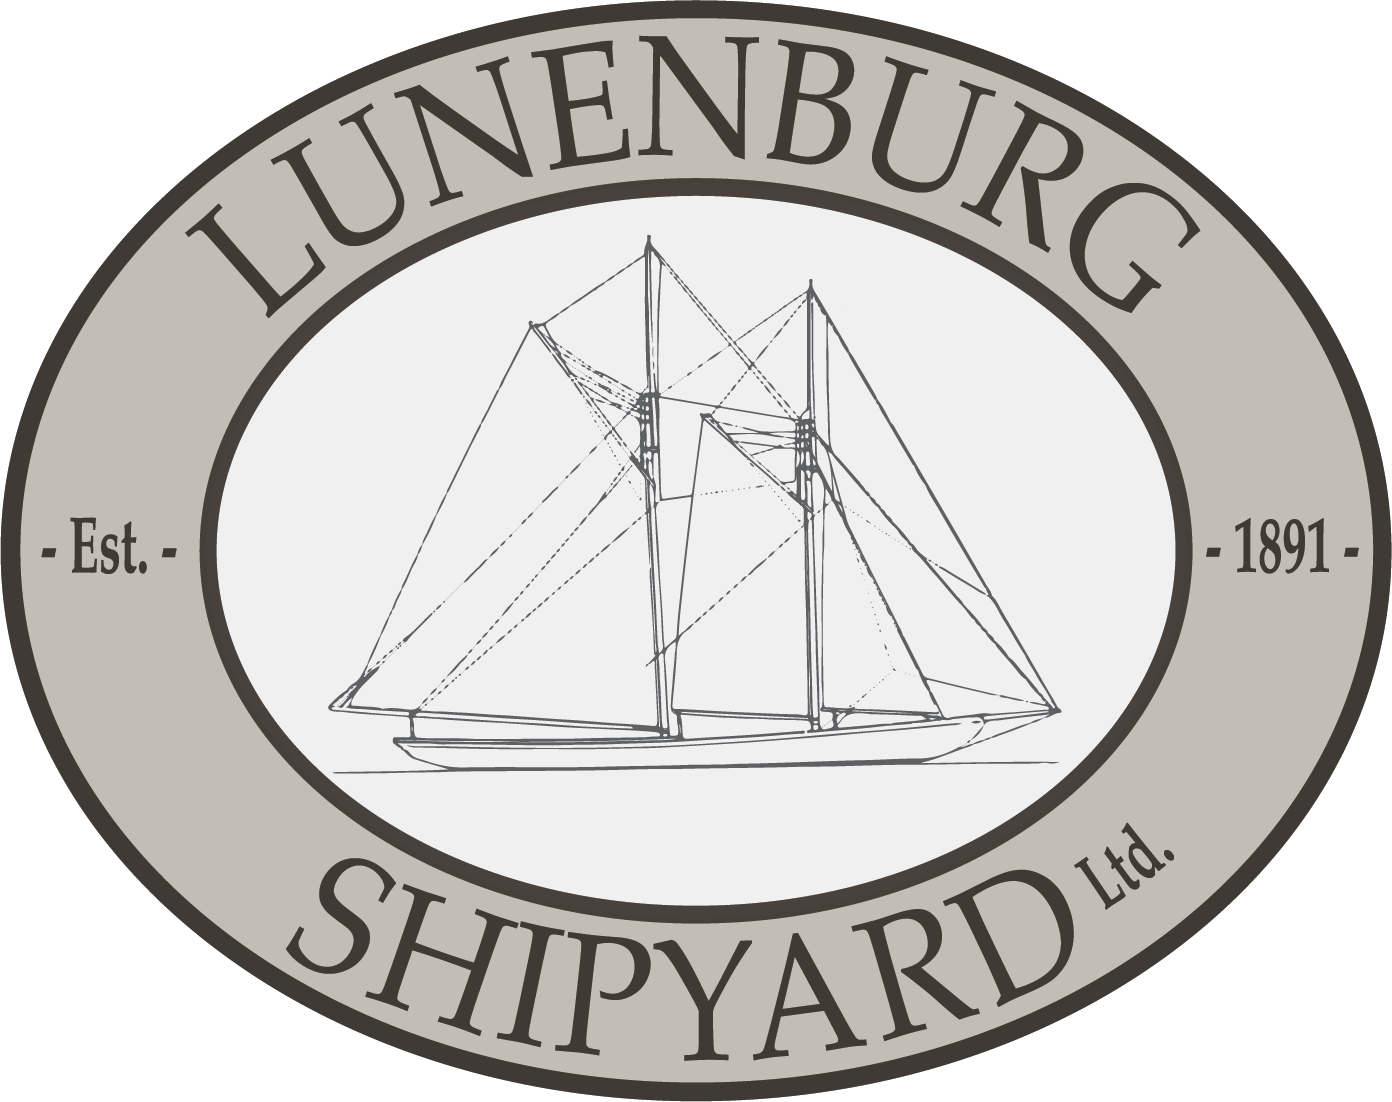 Lunenburg Shipyard Ltd.